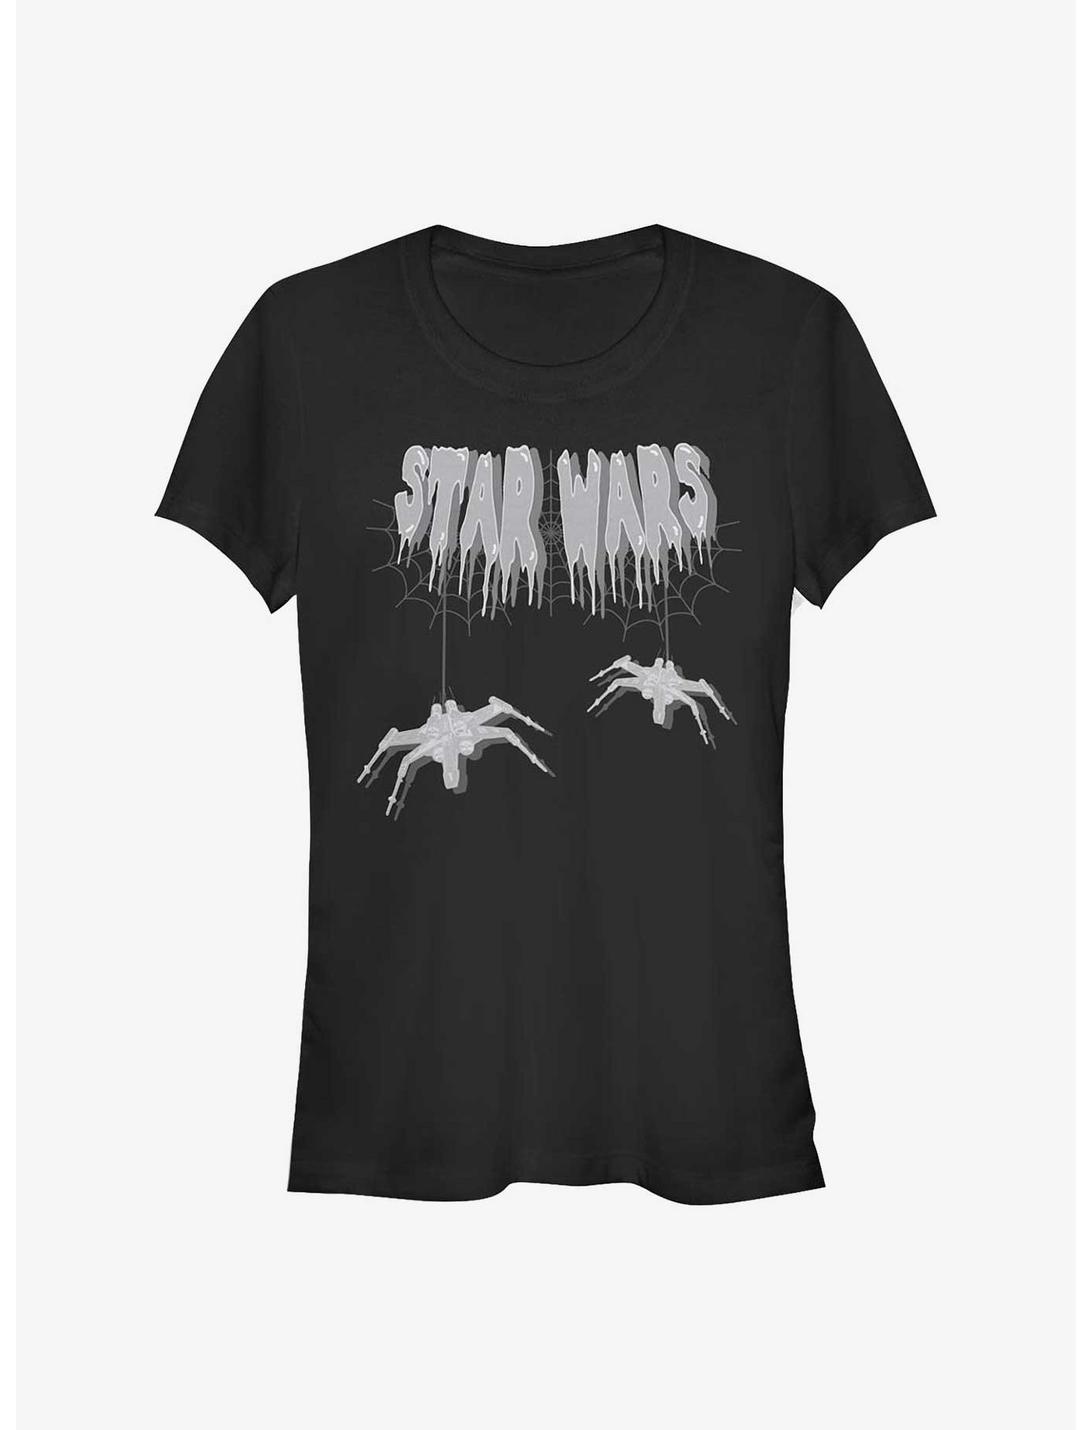 Star Wars Spooky Spiders X-Wing Logo Girls T-Shirt, BLACK, hi-res